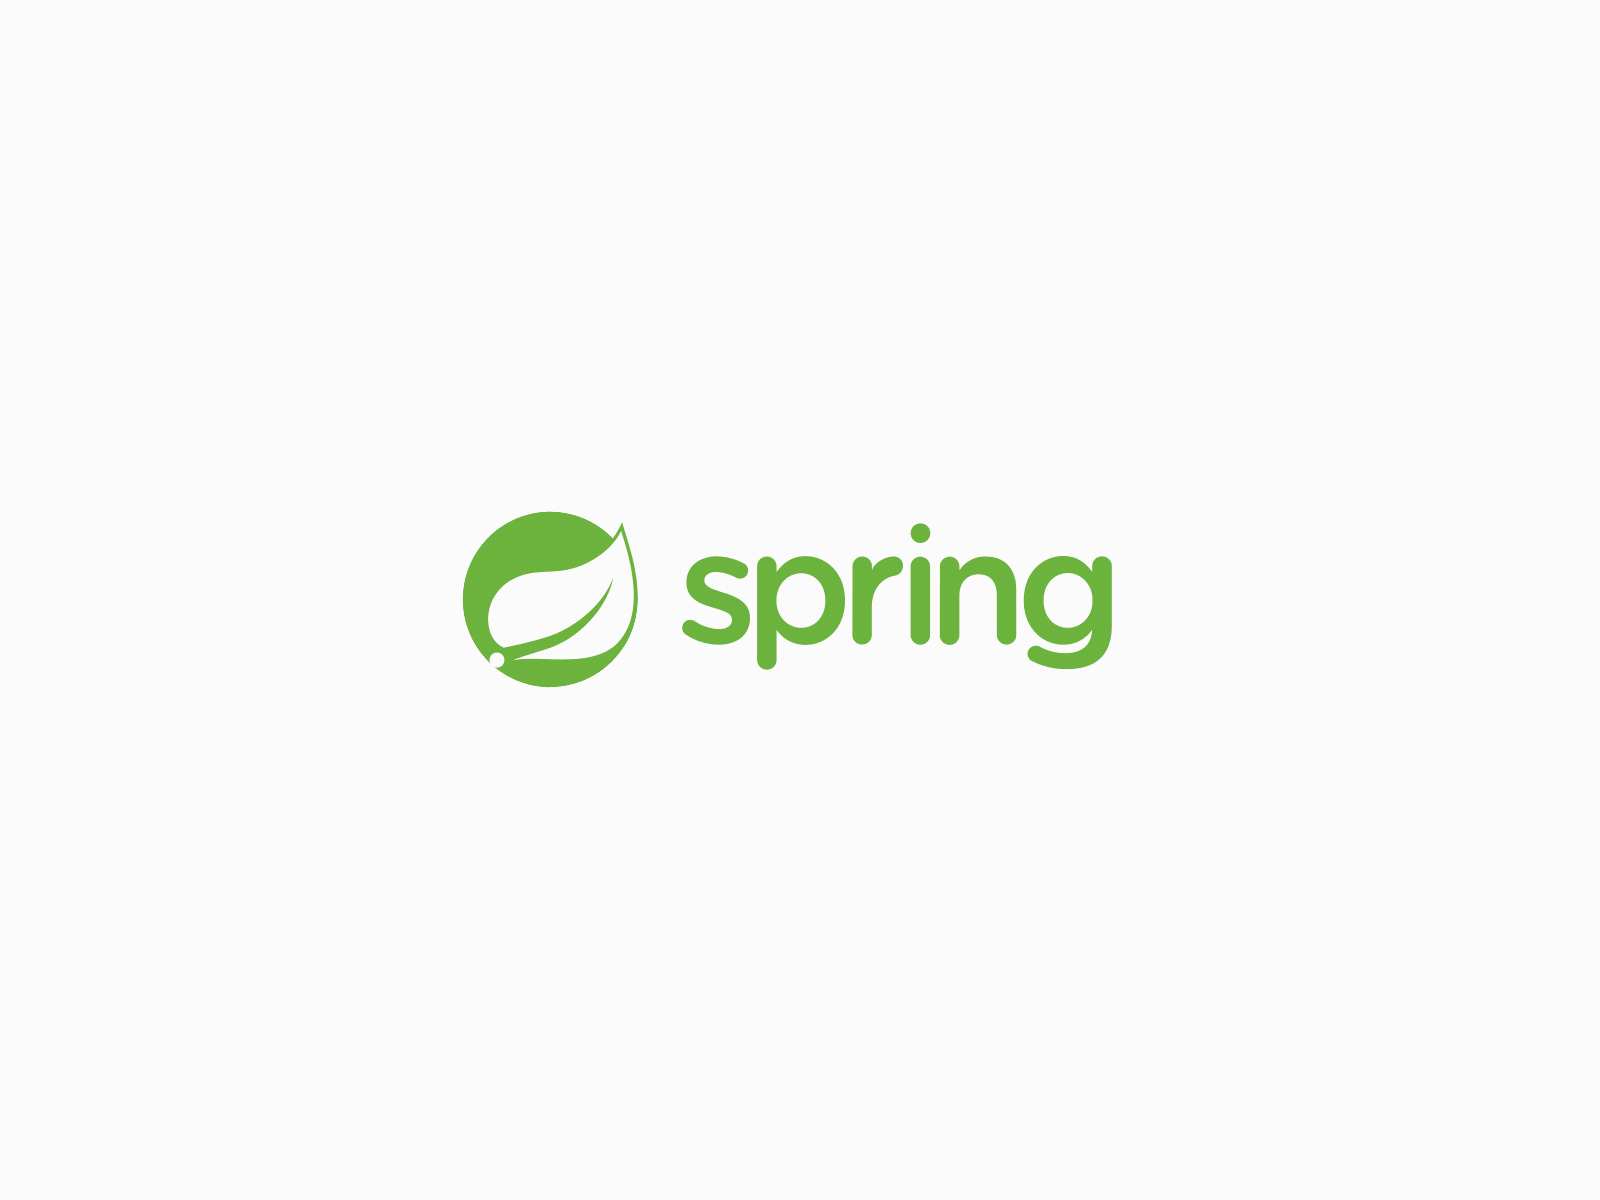 Spring.io logo animation by Moe Bonneau on Dribbble